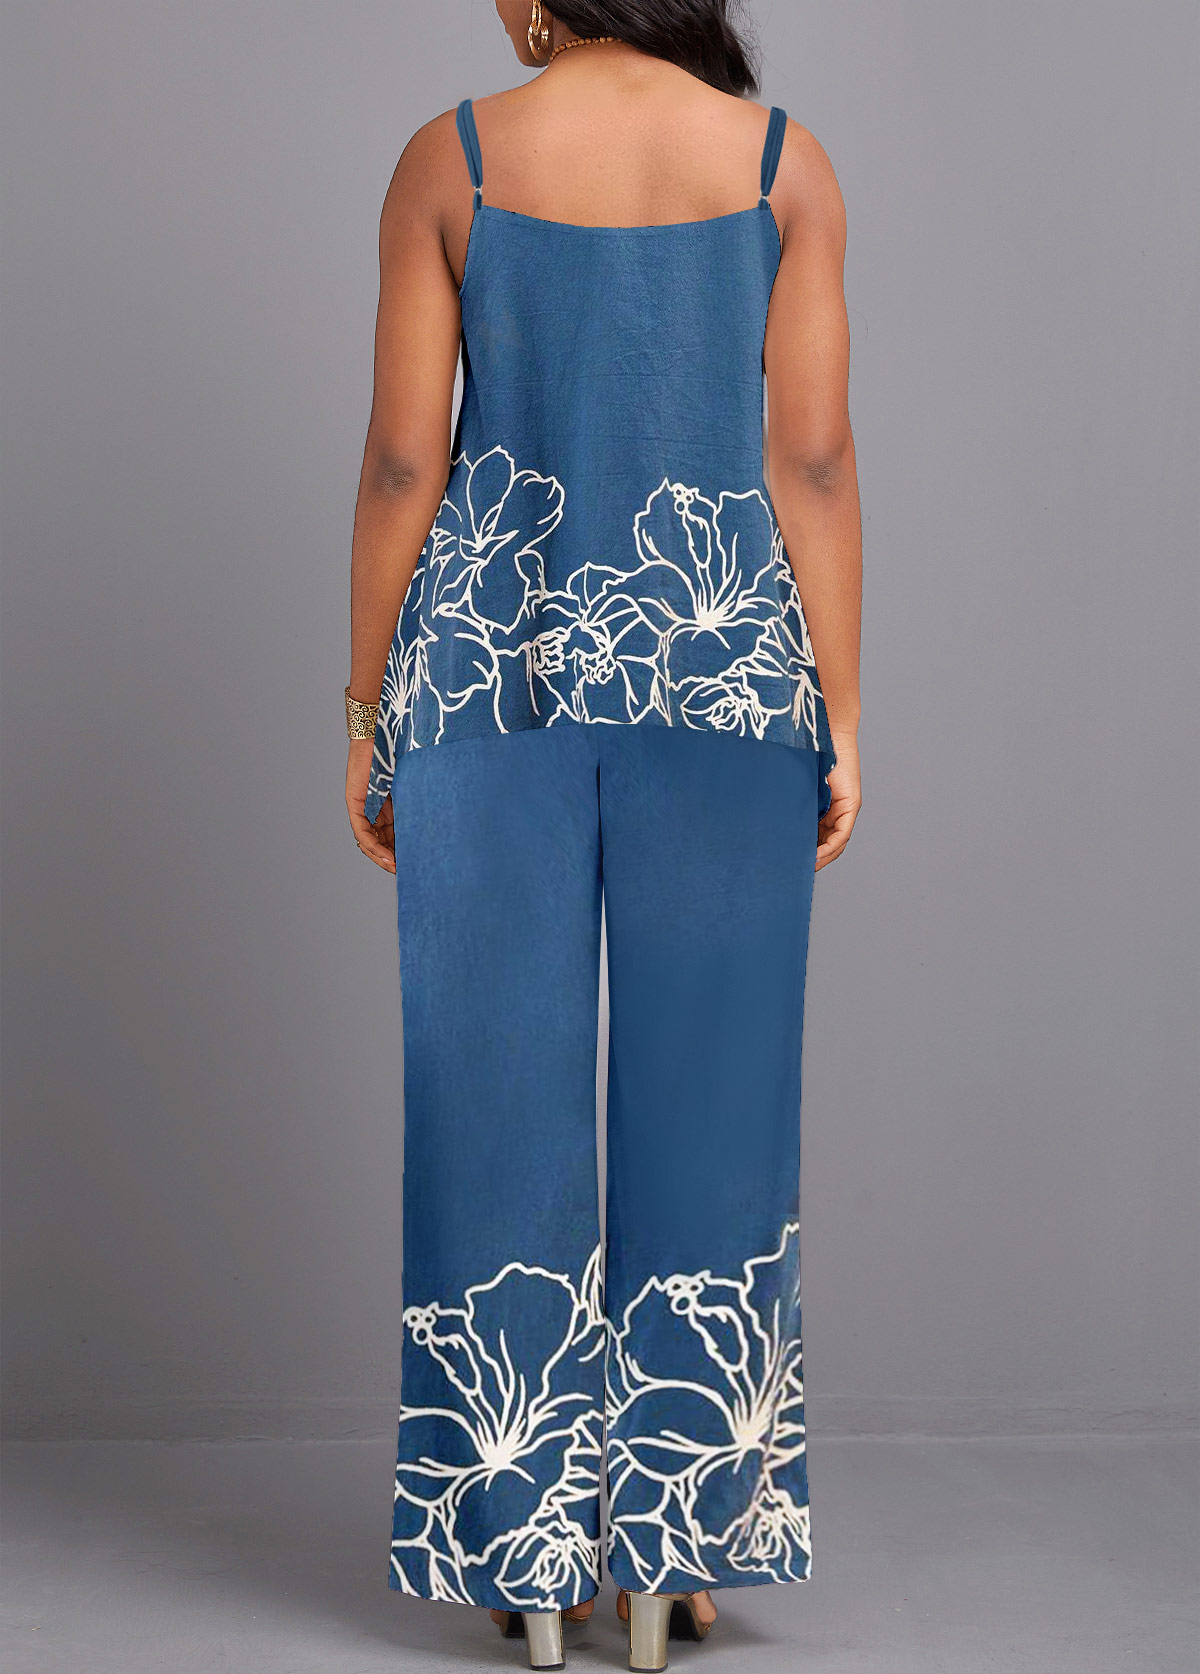 Denim Blue Criss Cross Floral Print Top and Pants